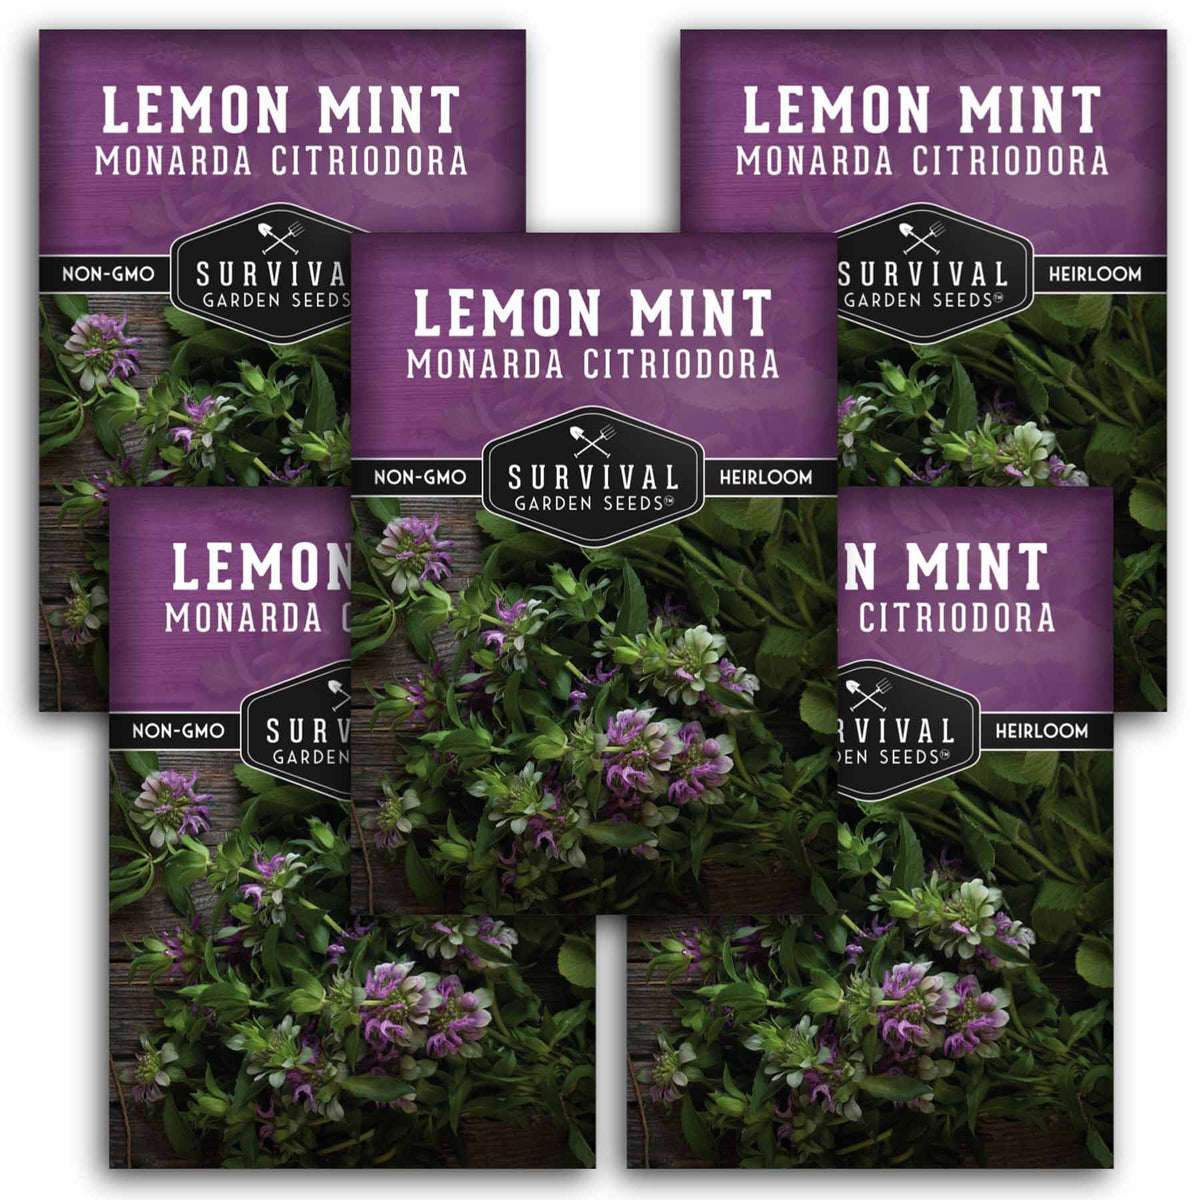 5 Packets of Lemon Mint seeds